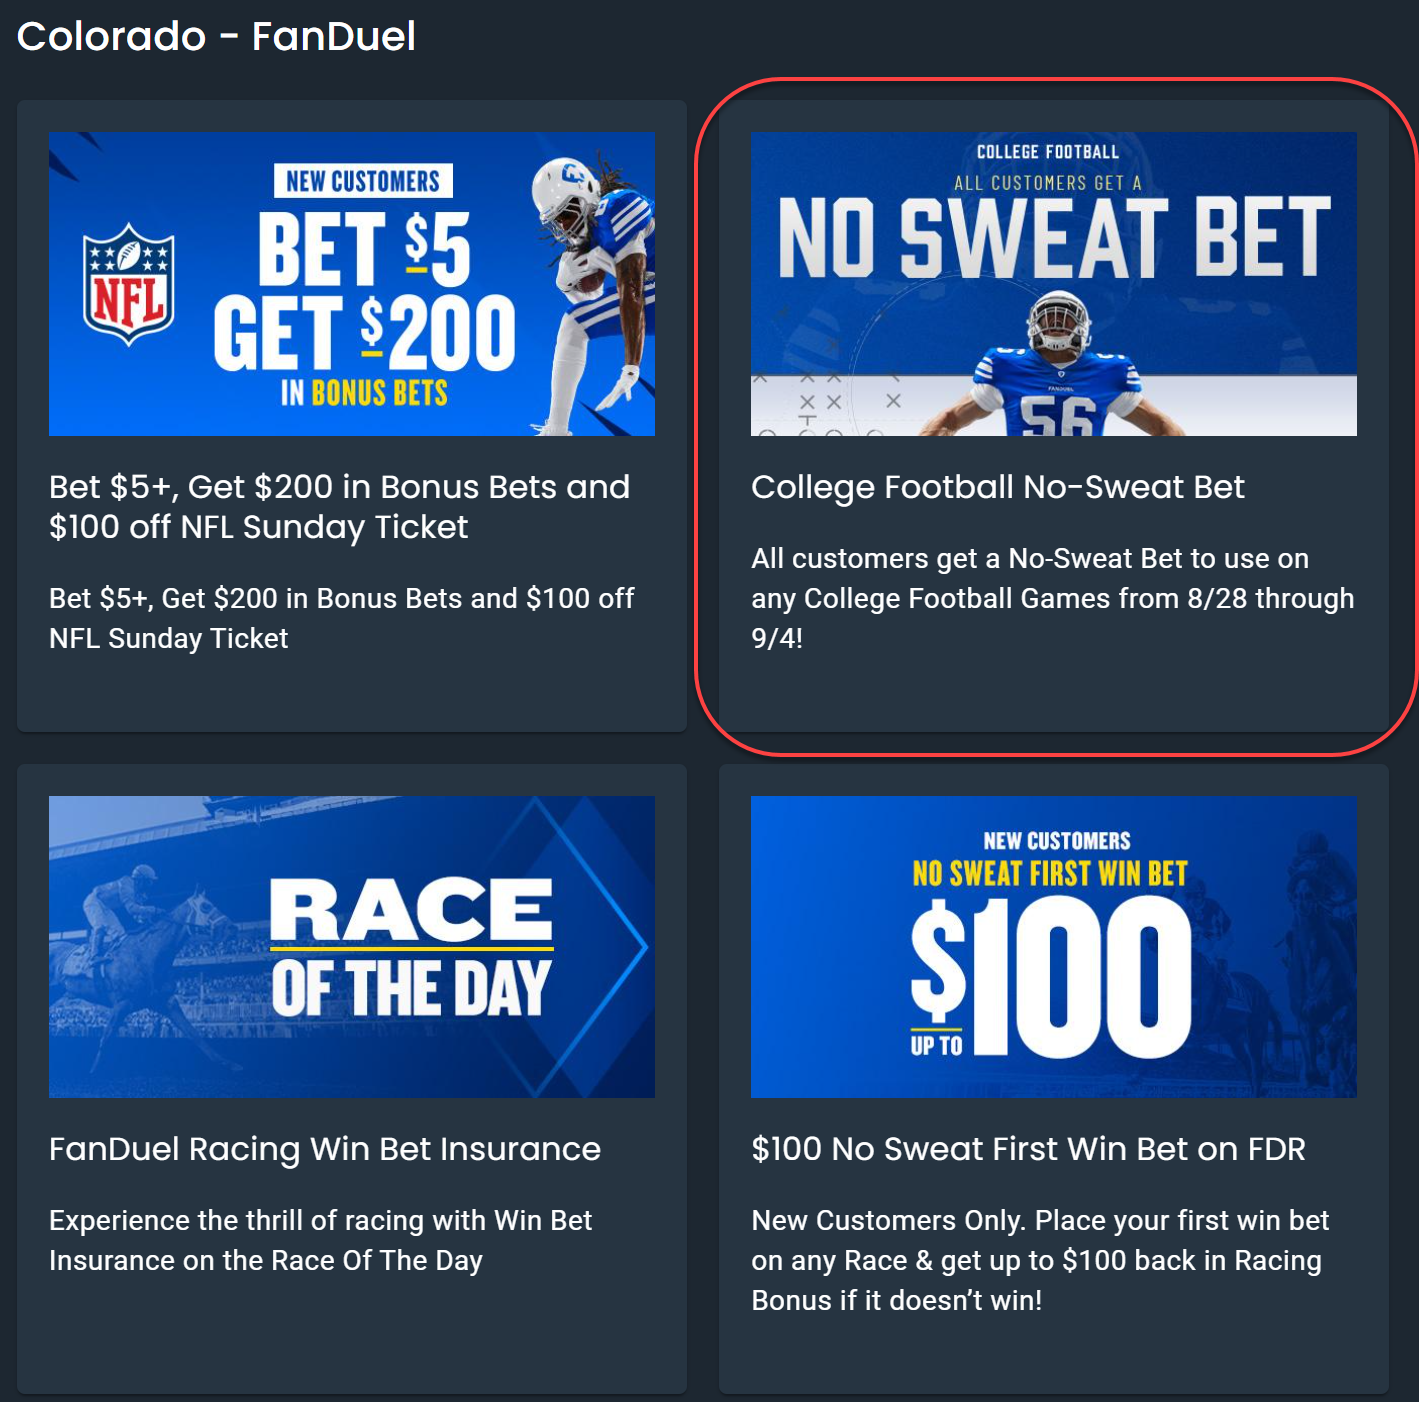 Screenshot of FanDuel Sportsbook Promotions displayed on the DarkHorse Odds Promo Dashboard